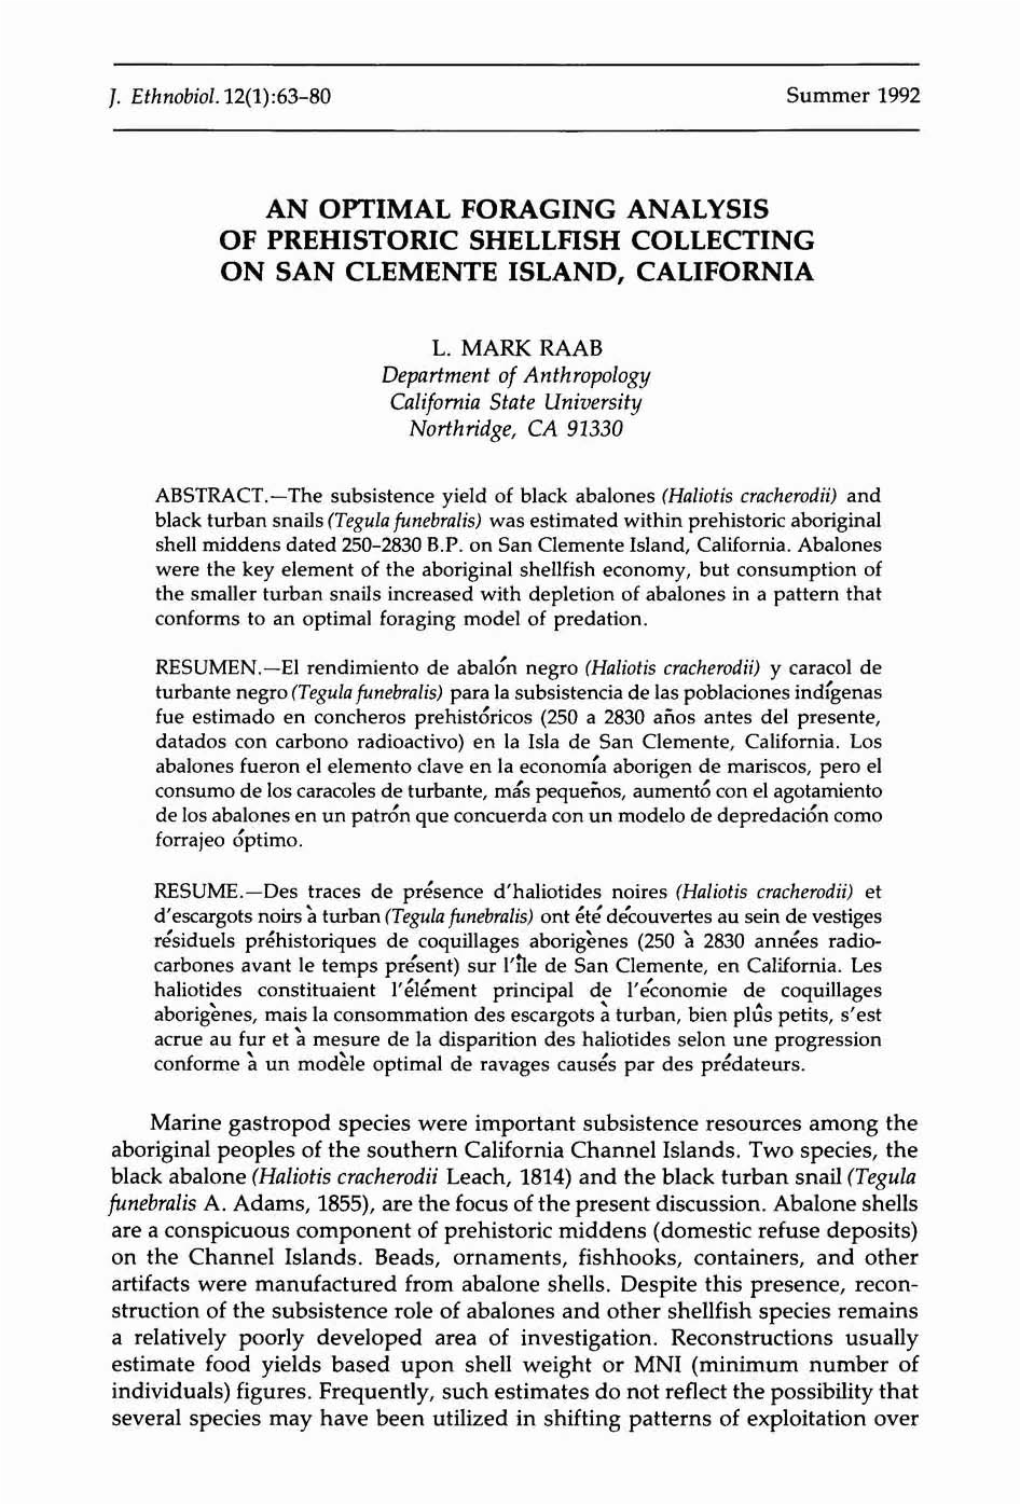 An Optimal Foraging Analysis of Prehistoric Shellfish Collecting on San Clemente Island, California